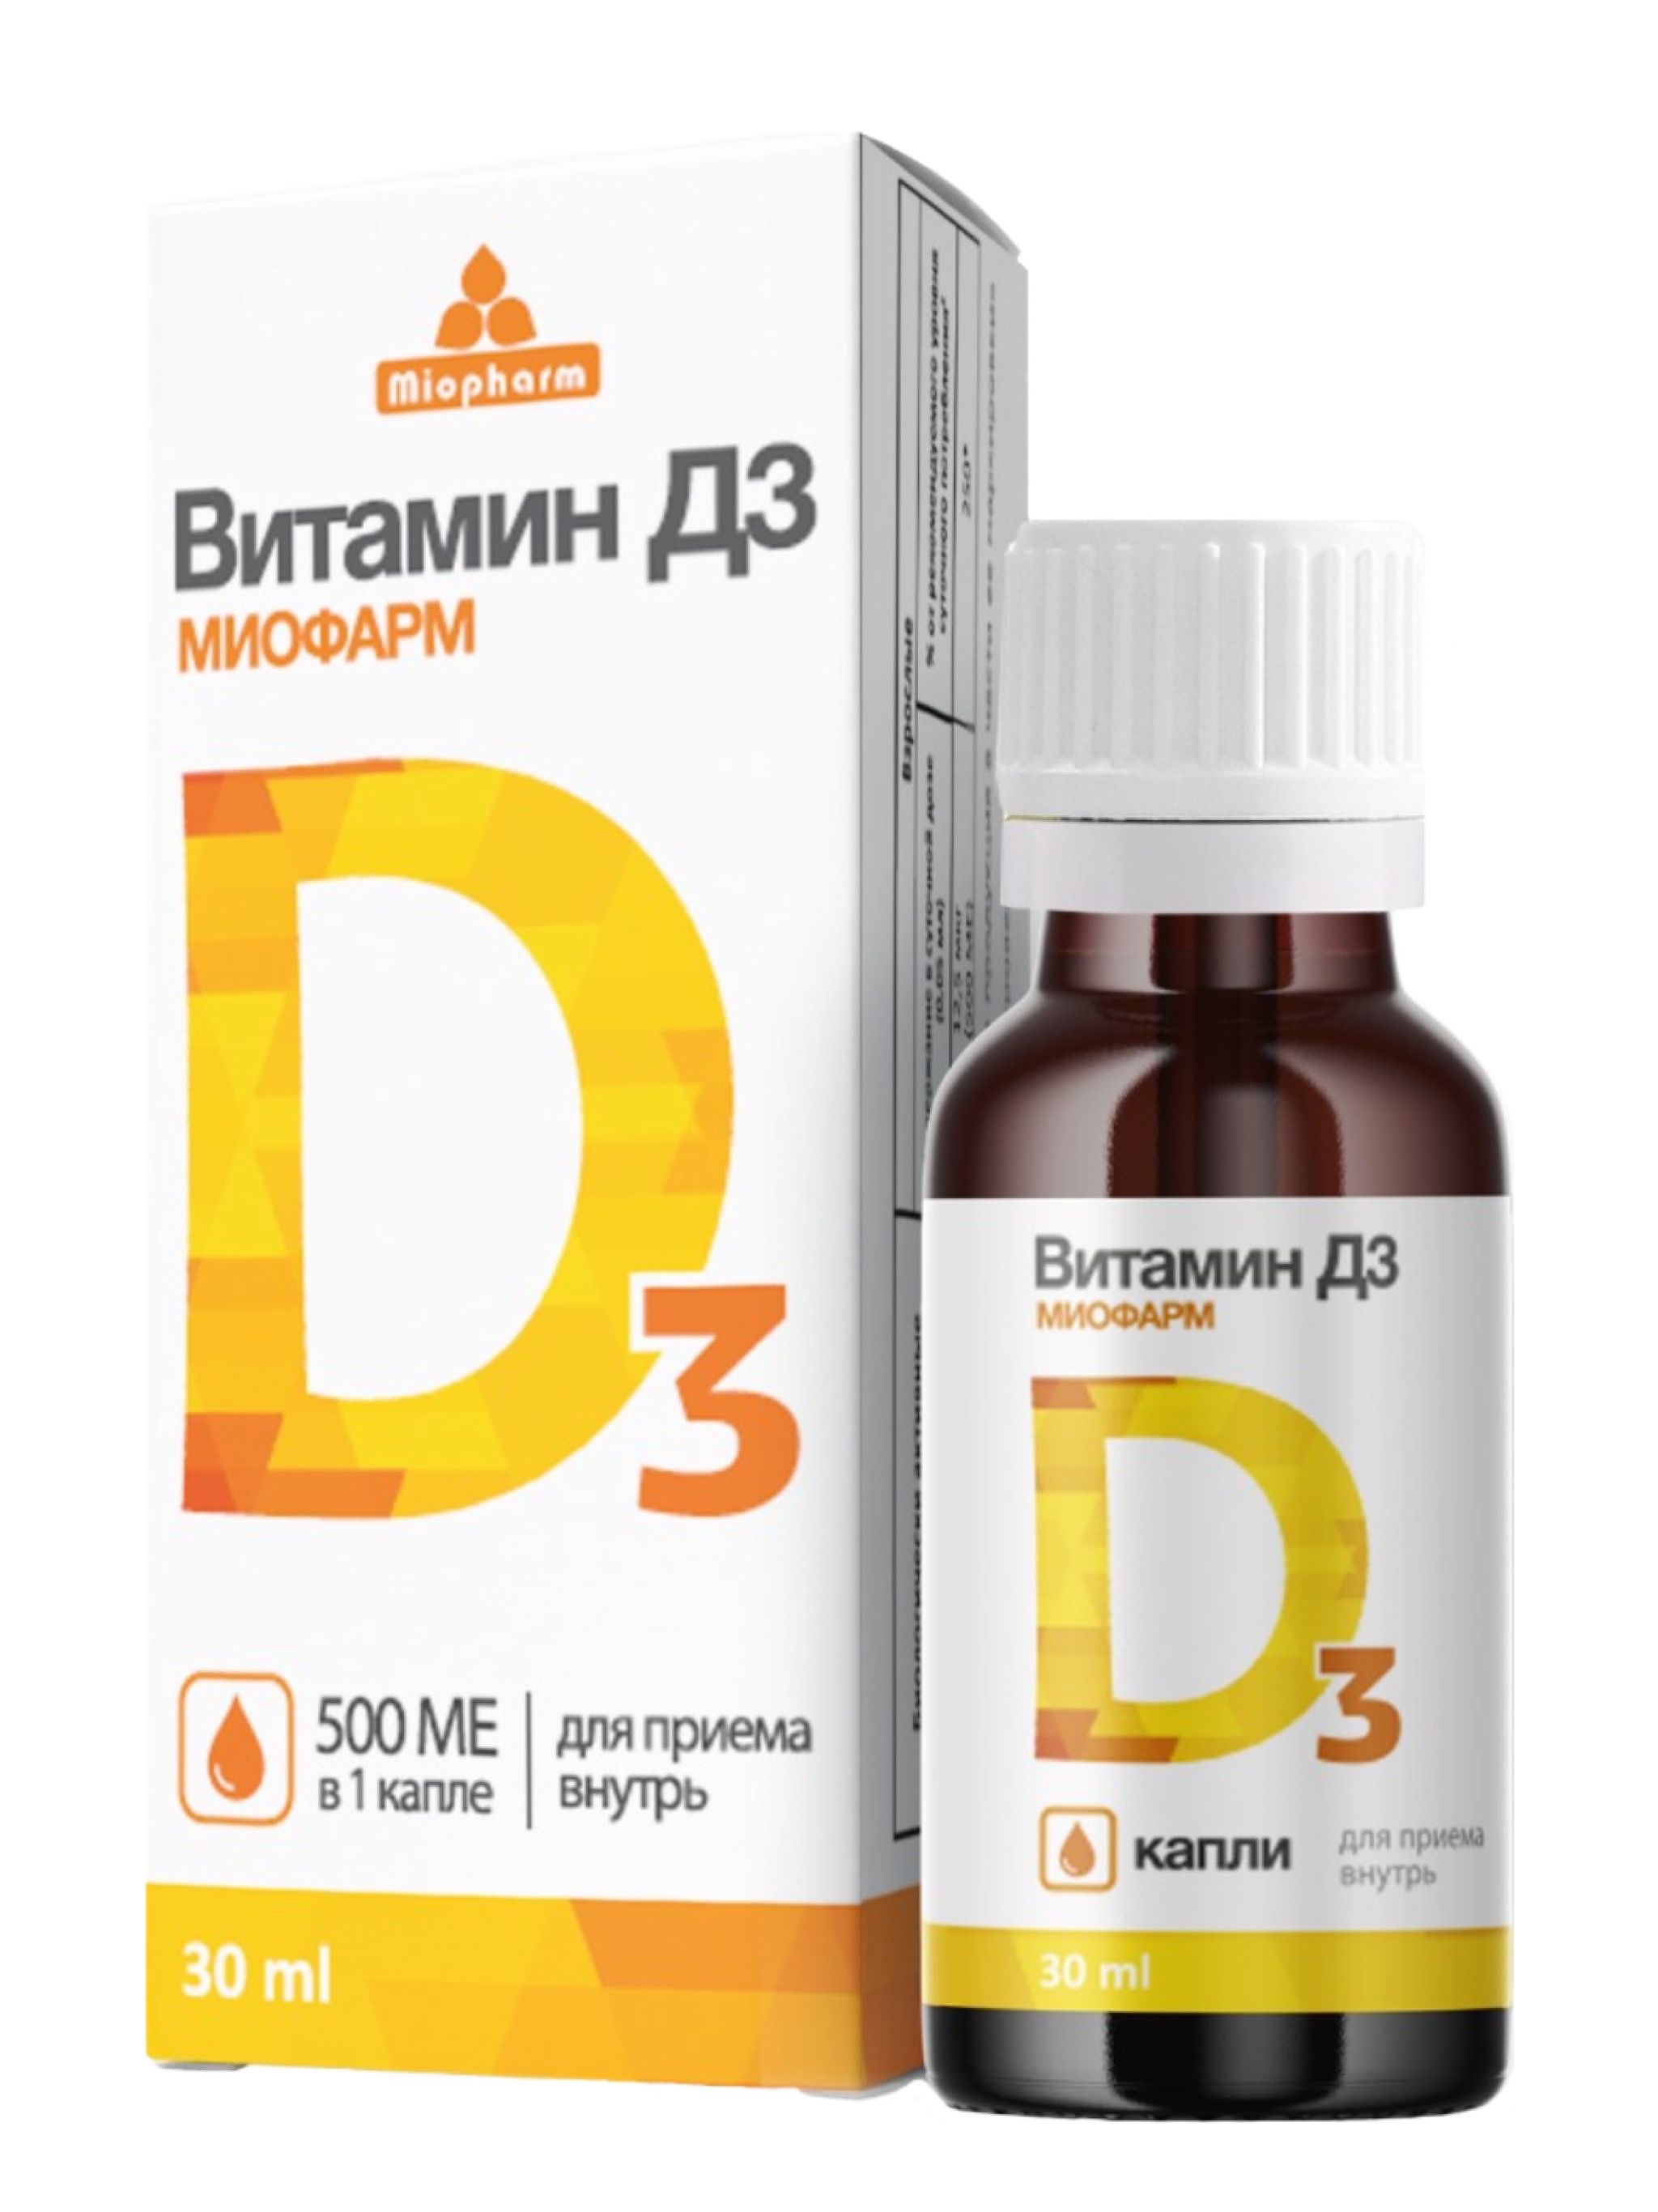 Витамин д3 миофарм